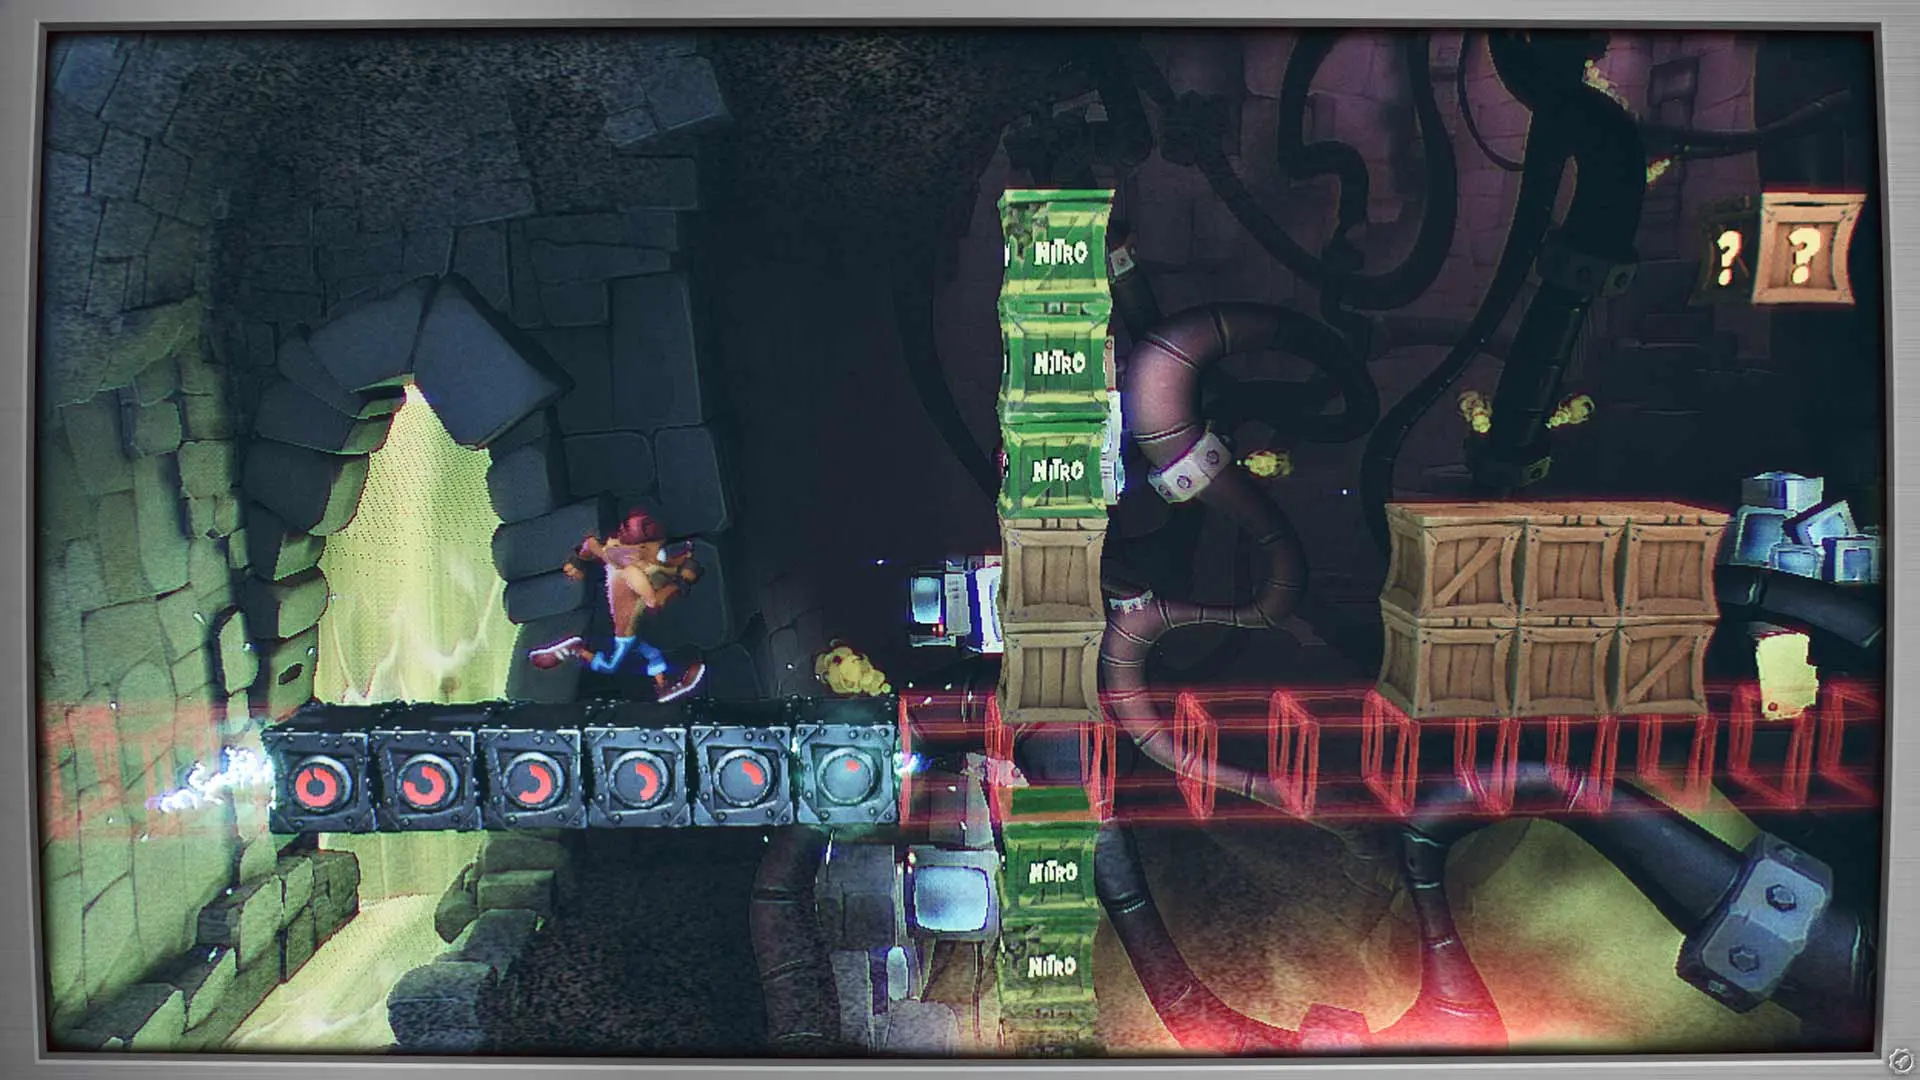 Crash Bandicoot 4: It's About Time flashback level screenshot